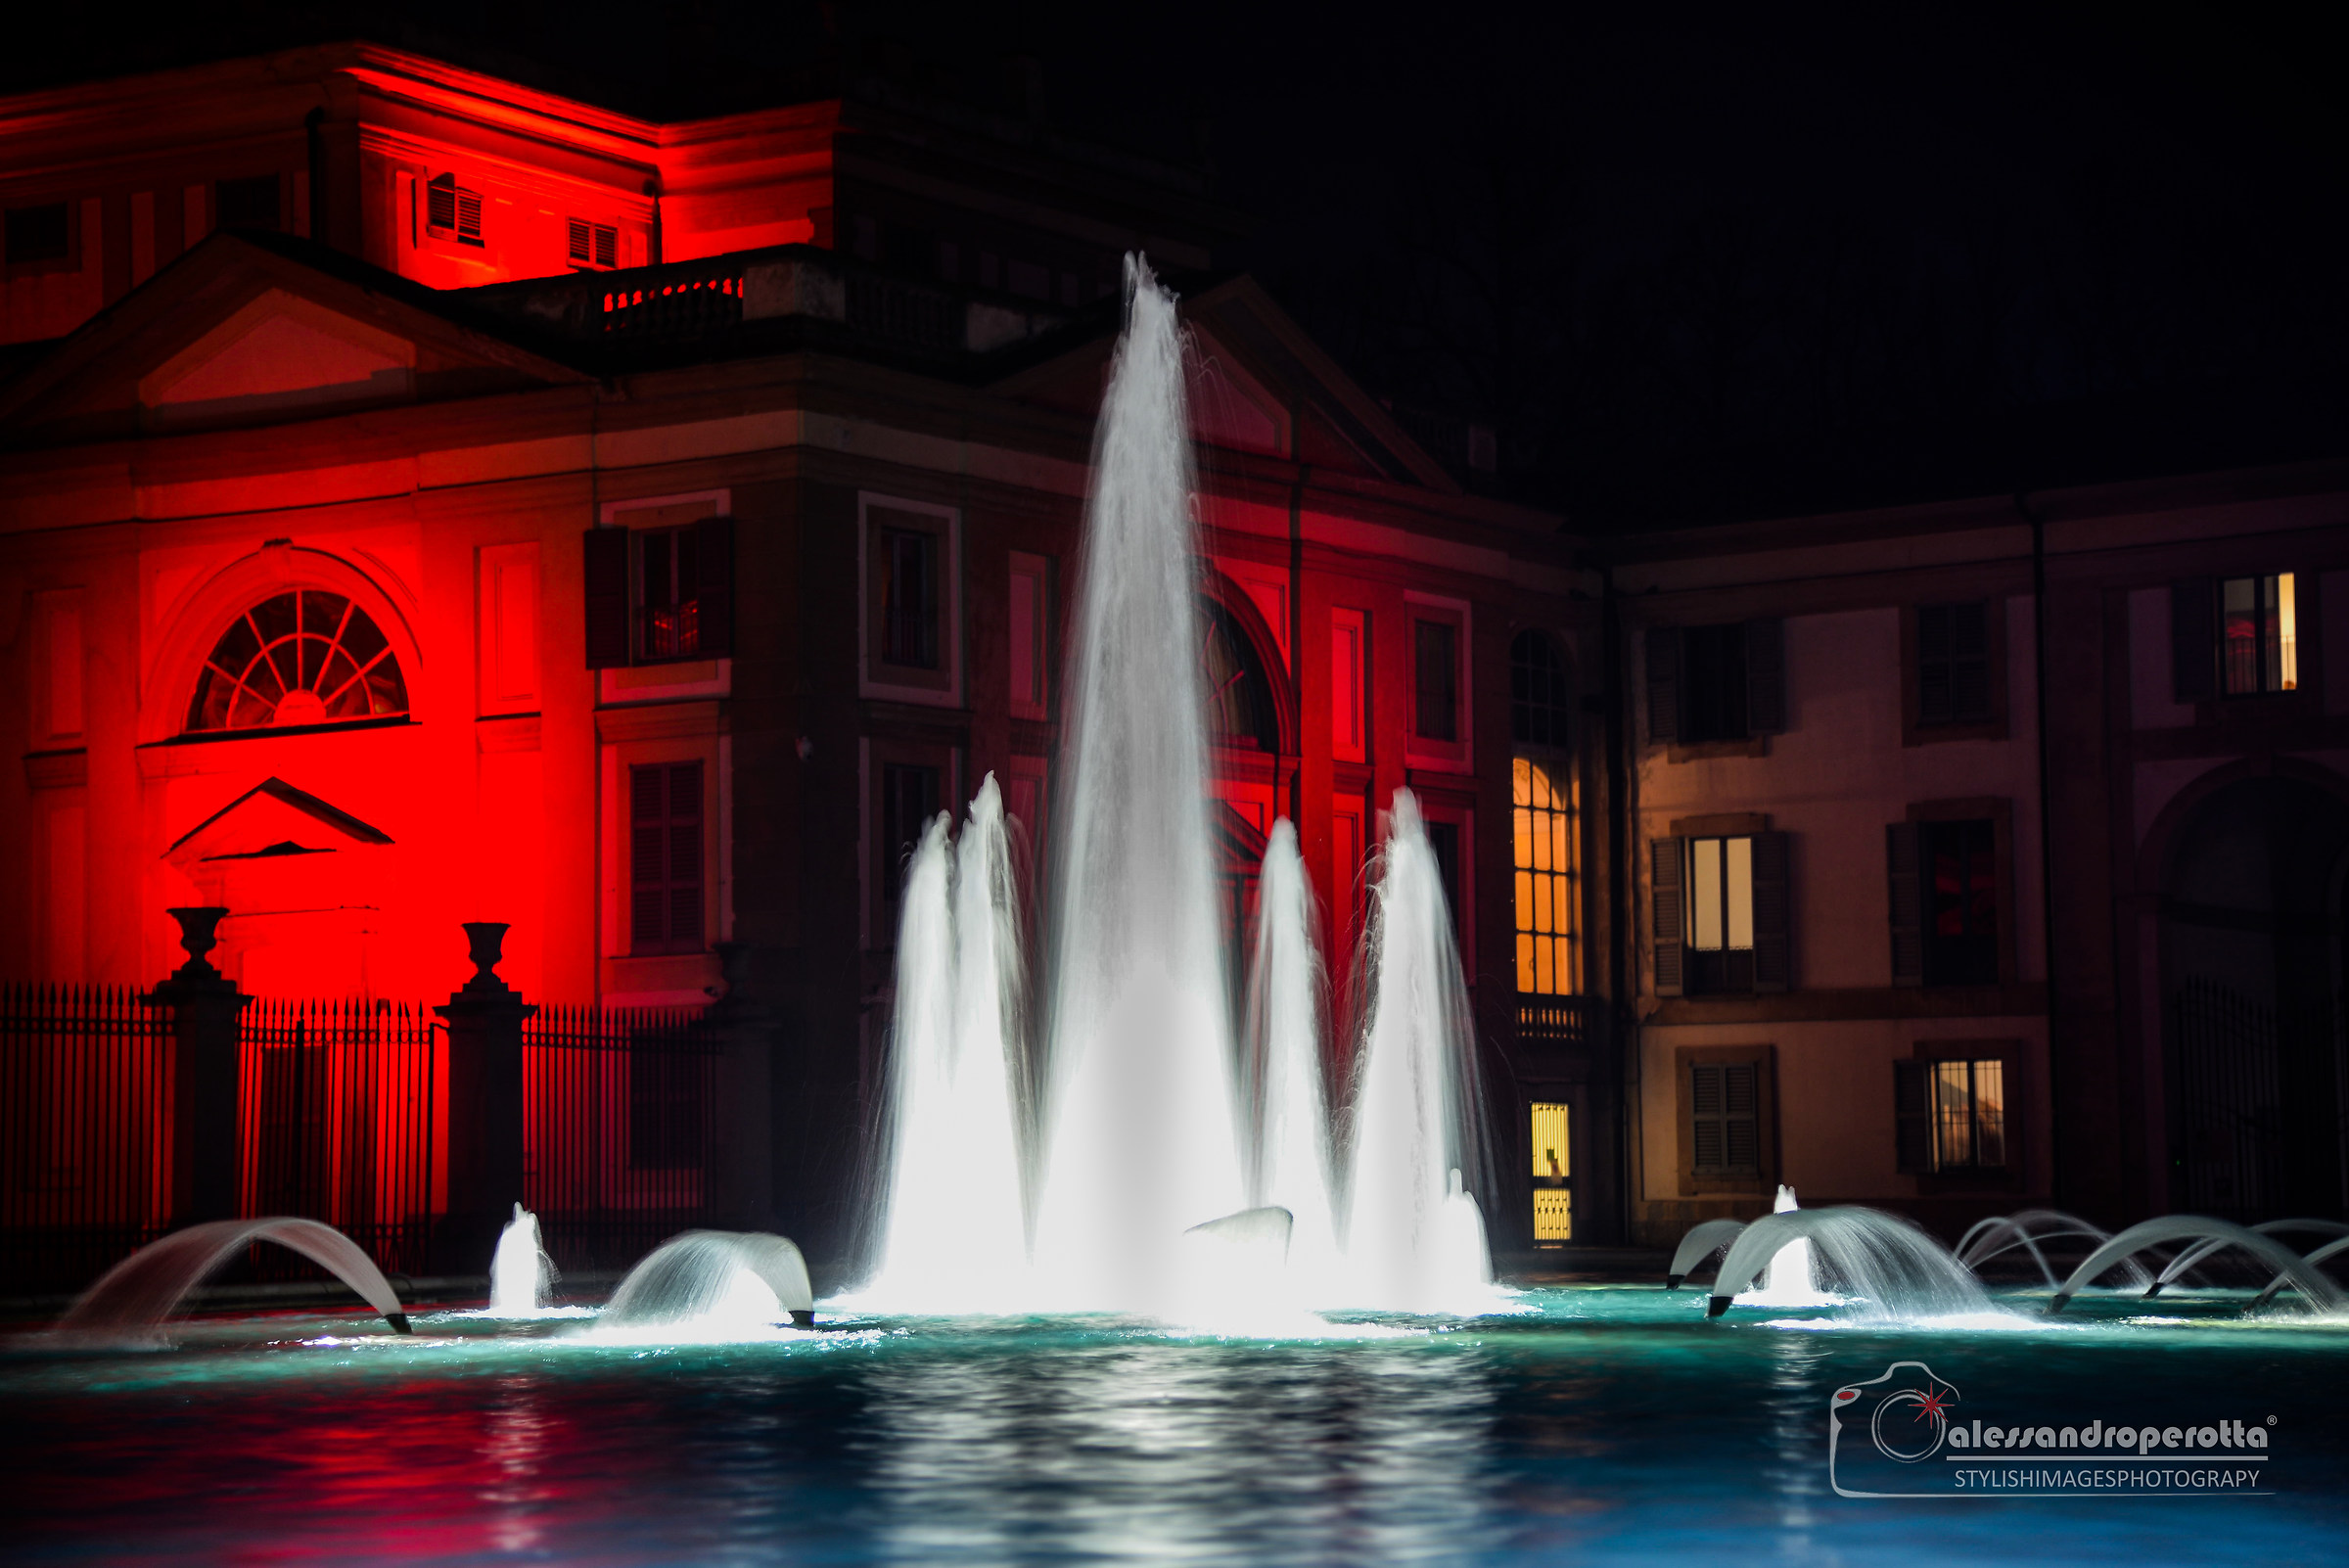 Royal Villa of Monza by night...